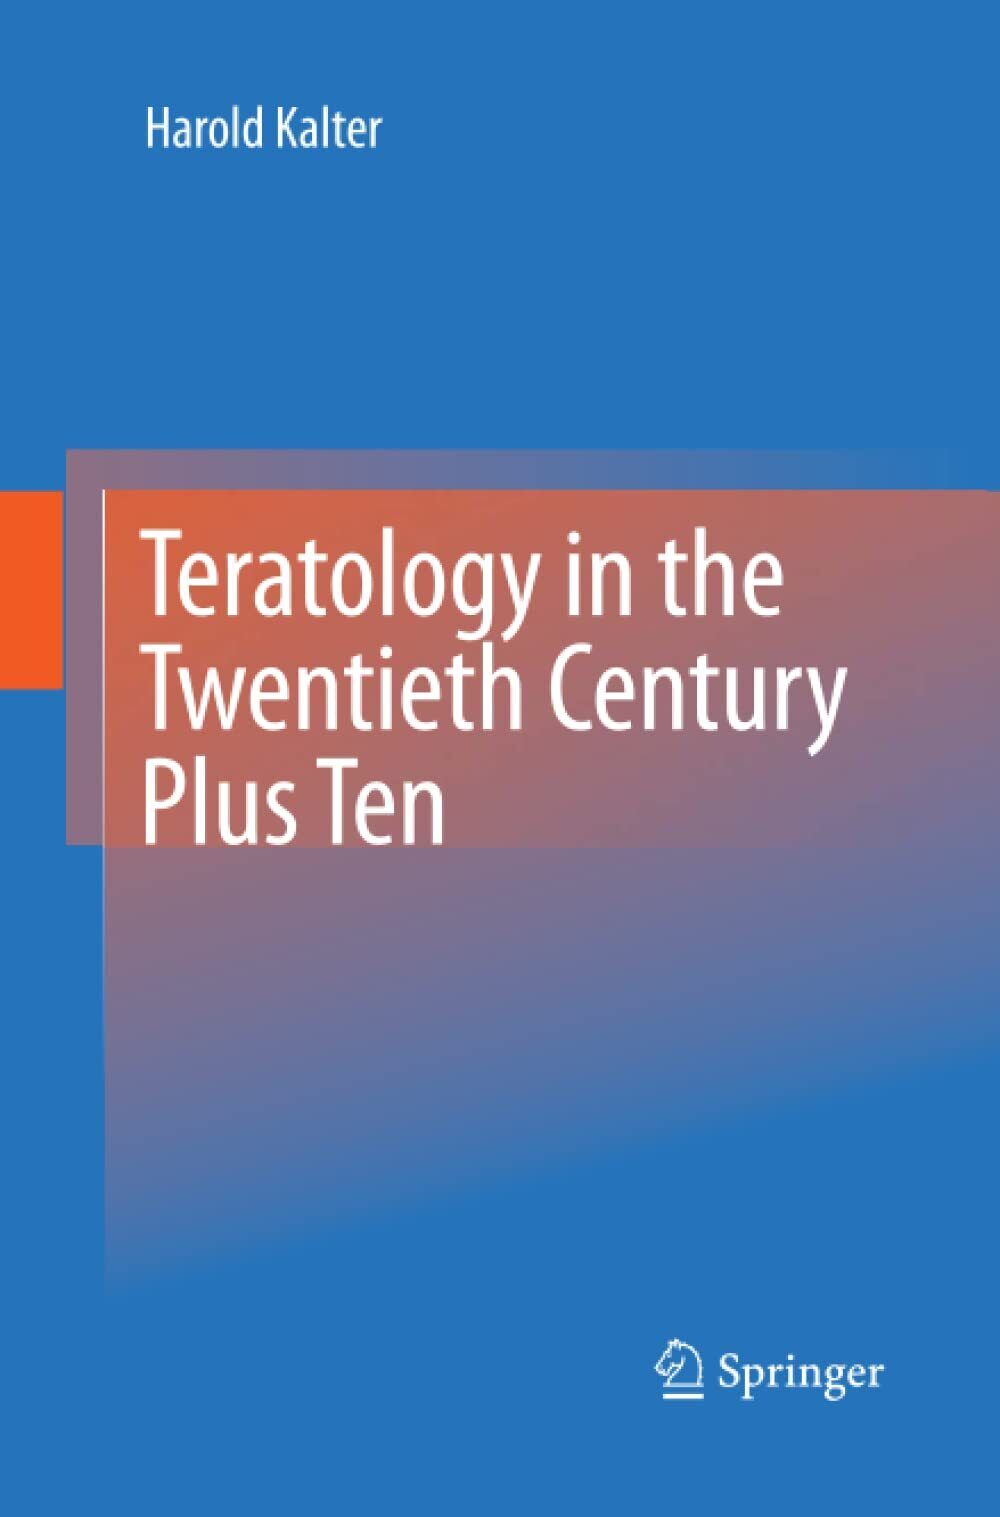 Teratology in the Twentieth Century Plus Ten - Harold Kalter - Springer, 2014